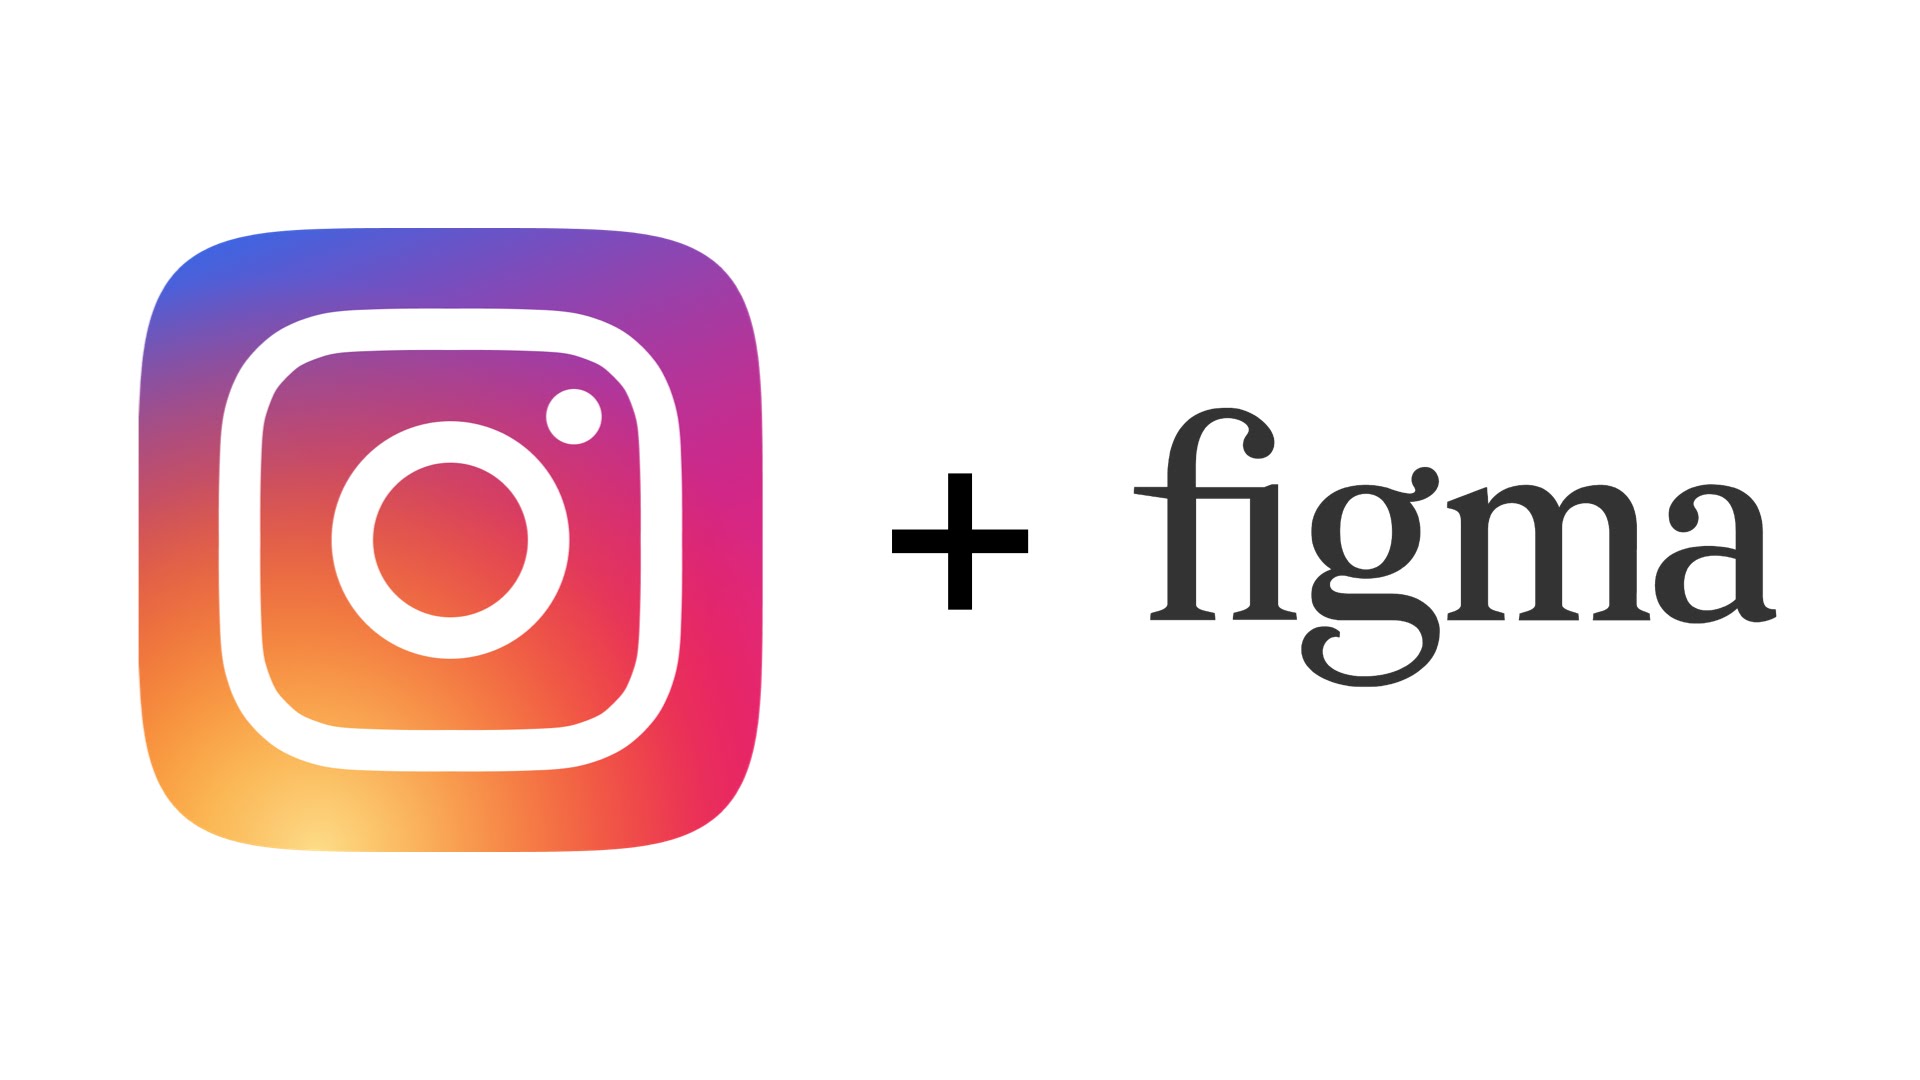 Instagram new icon vector free download  Logopik